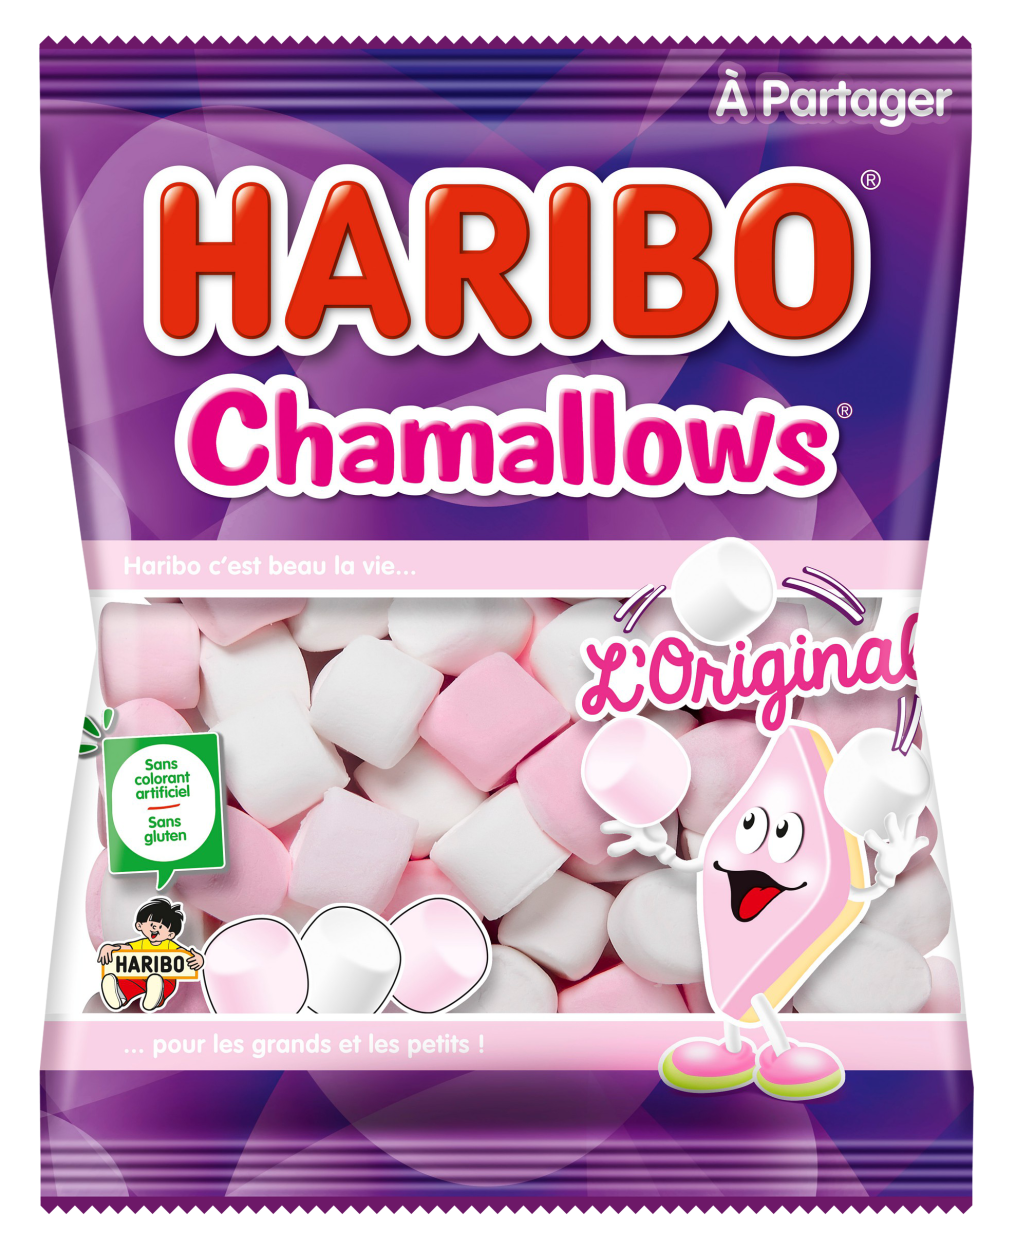 HARIBO Chamallow 100G (30 pack) - France - E54